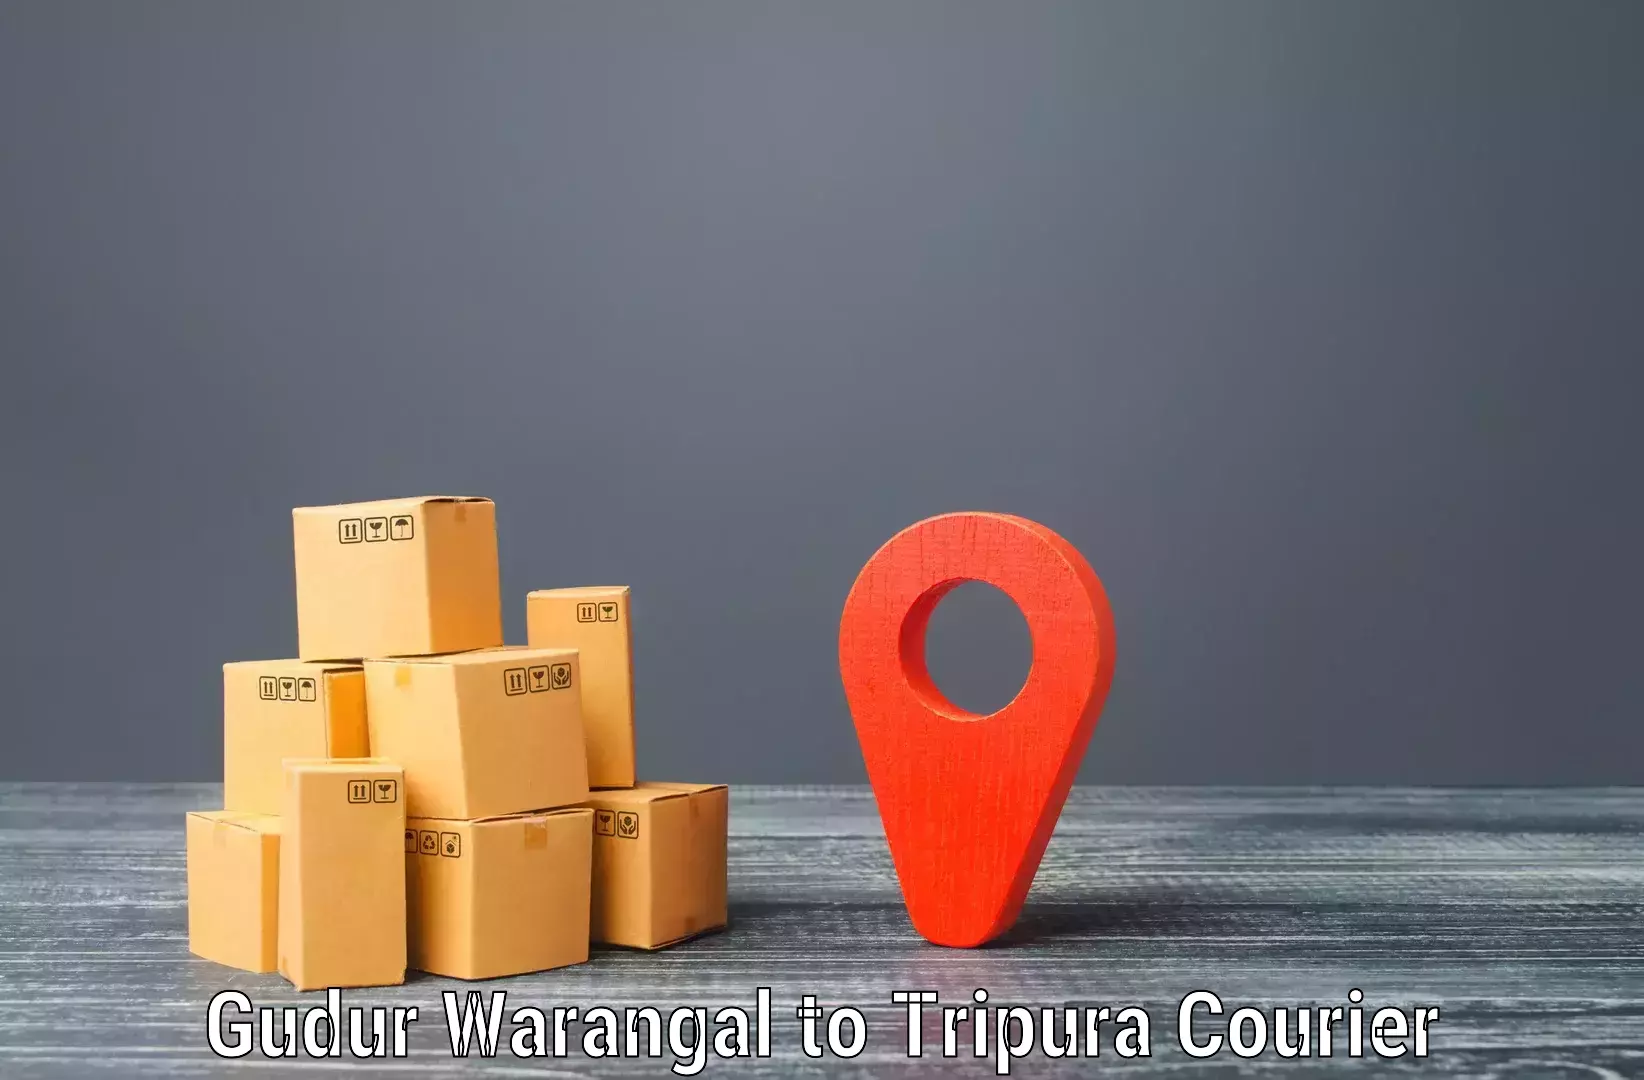 Specialized shipment handling Gudur Warangal to Aambasa